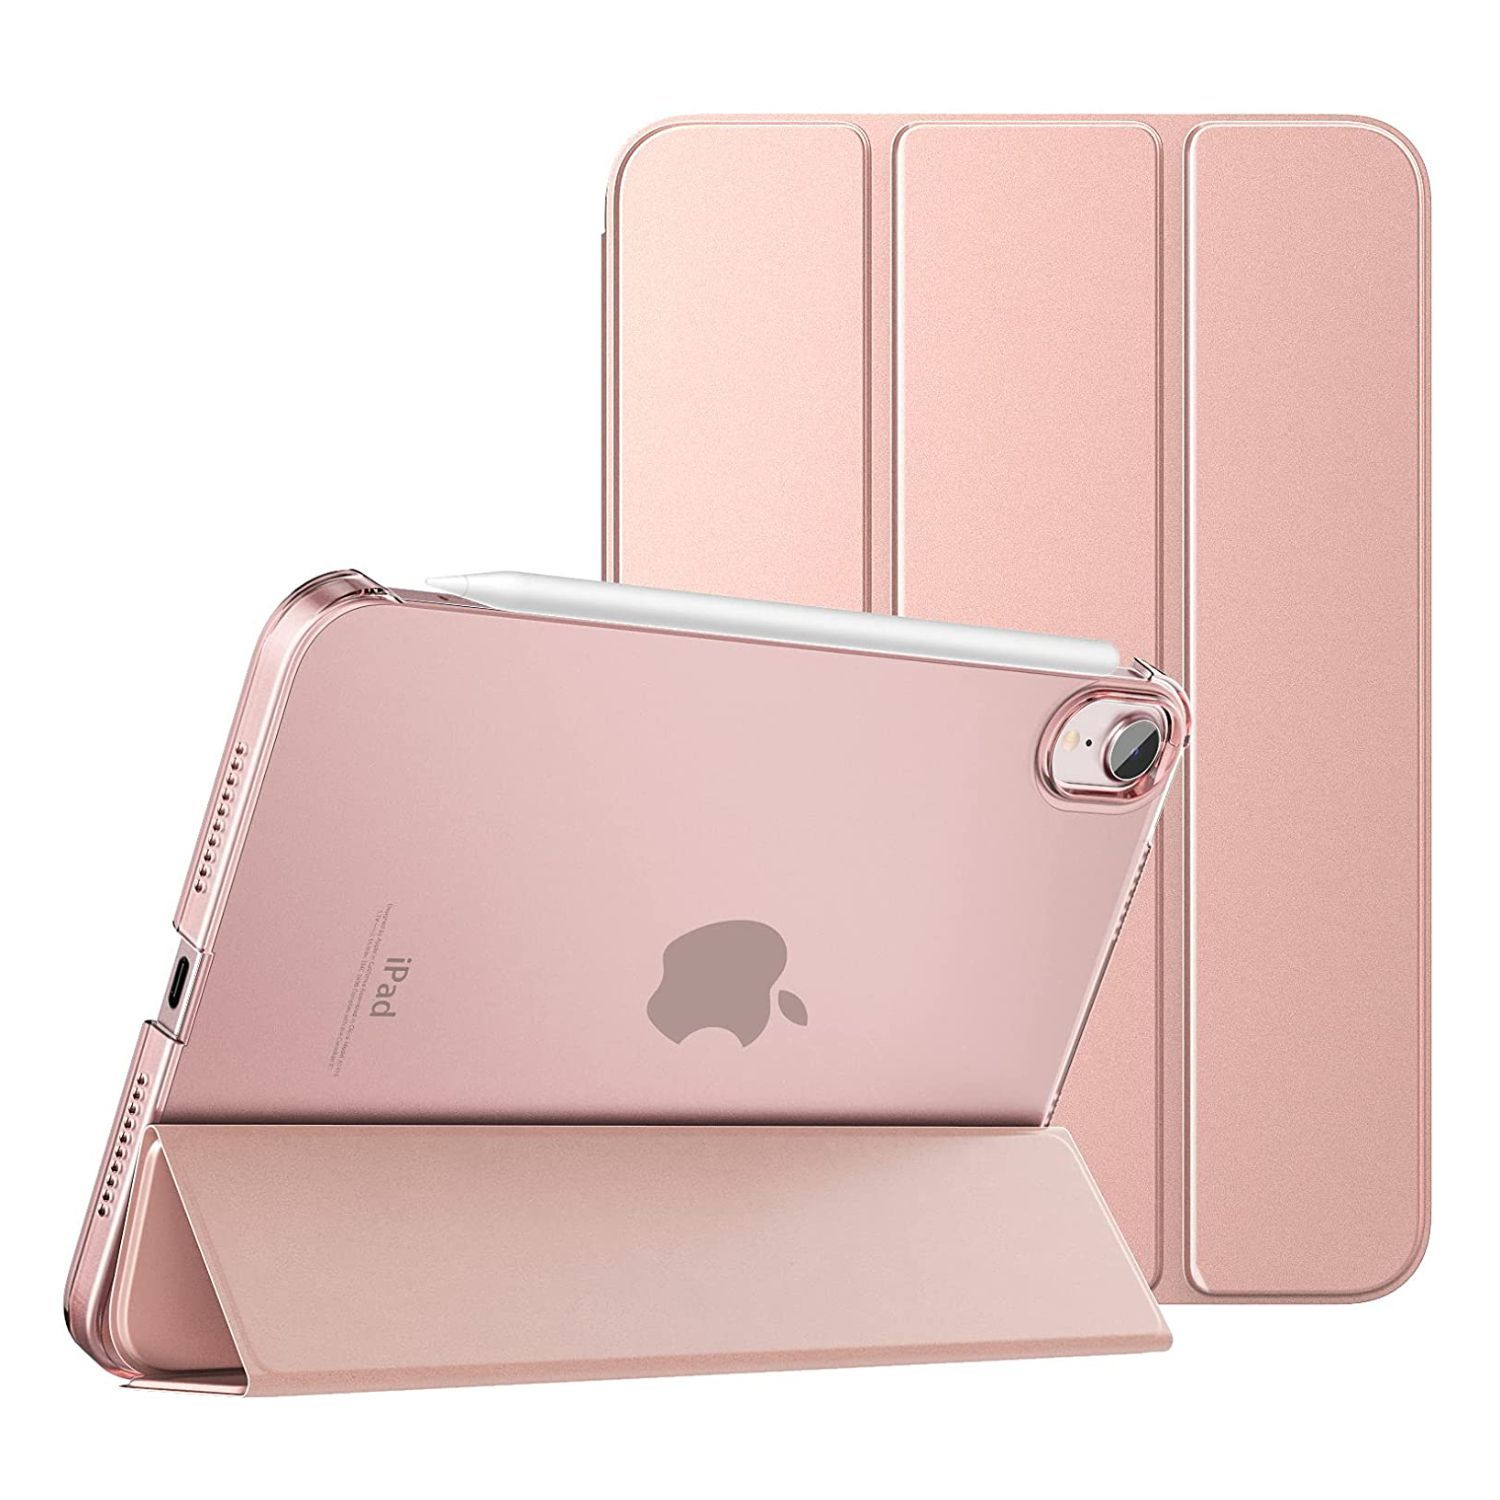 10 Best iPad Mini Cases in 2021 - Protective iPad mini Covers